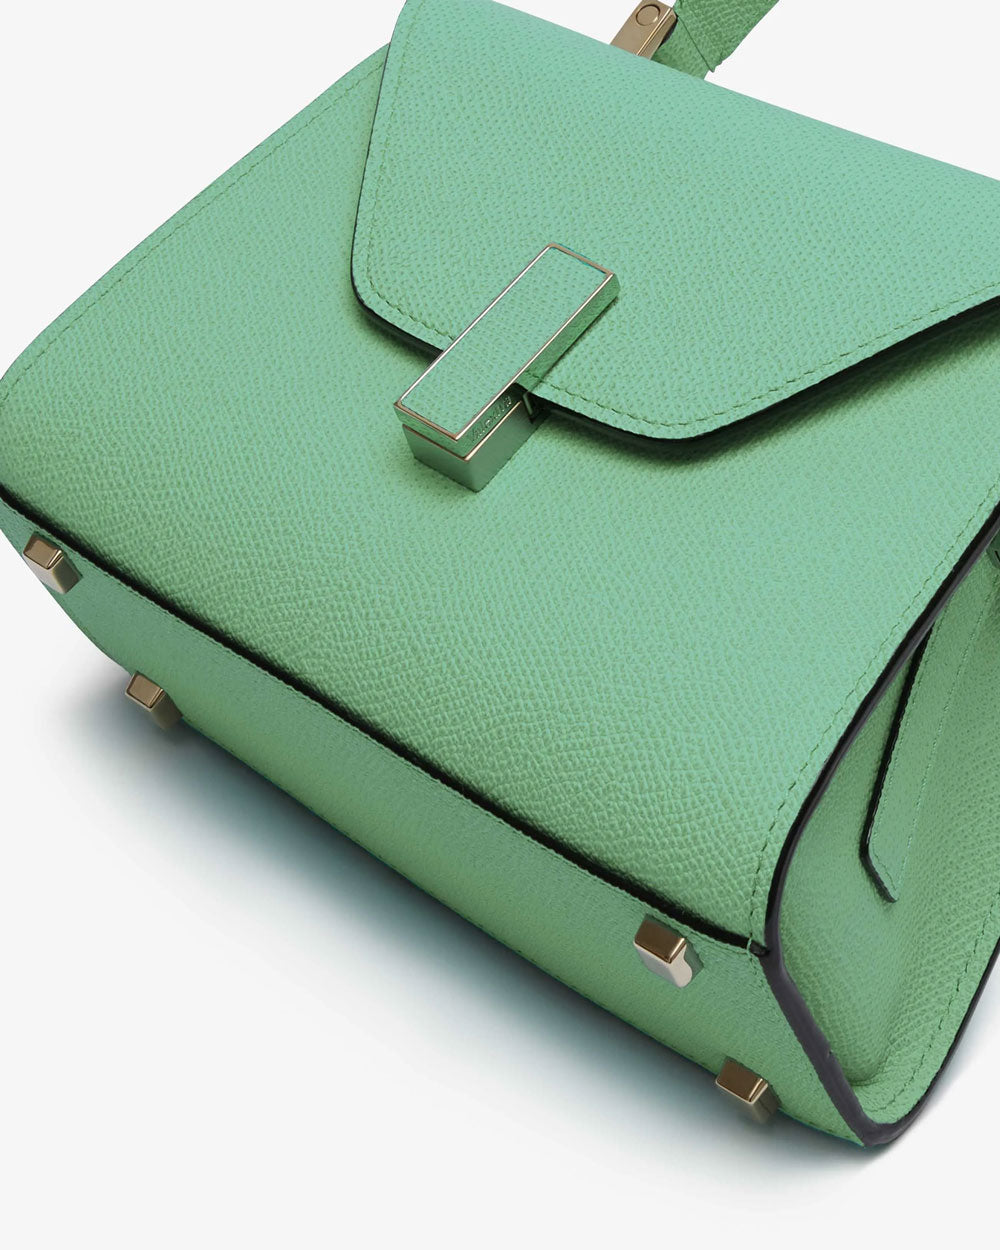 Iside Micro Bag in Spearmint Green